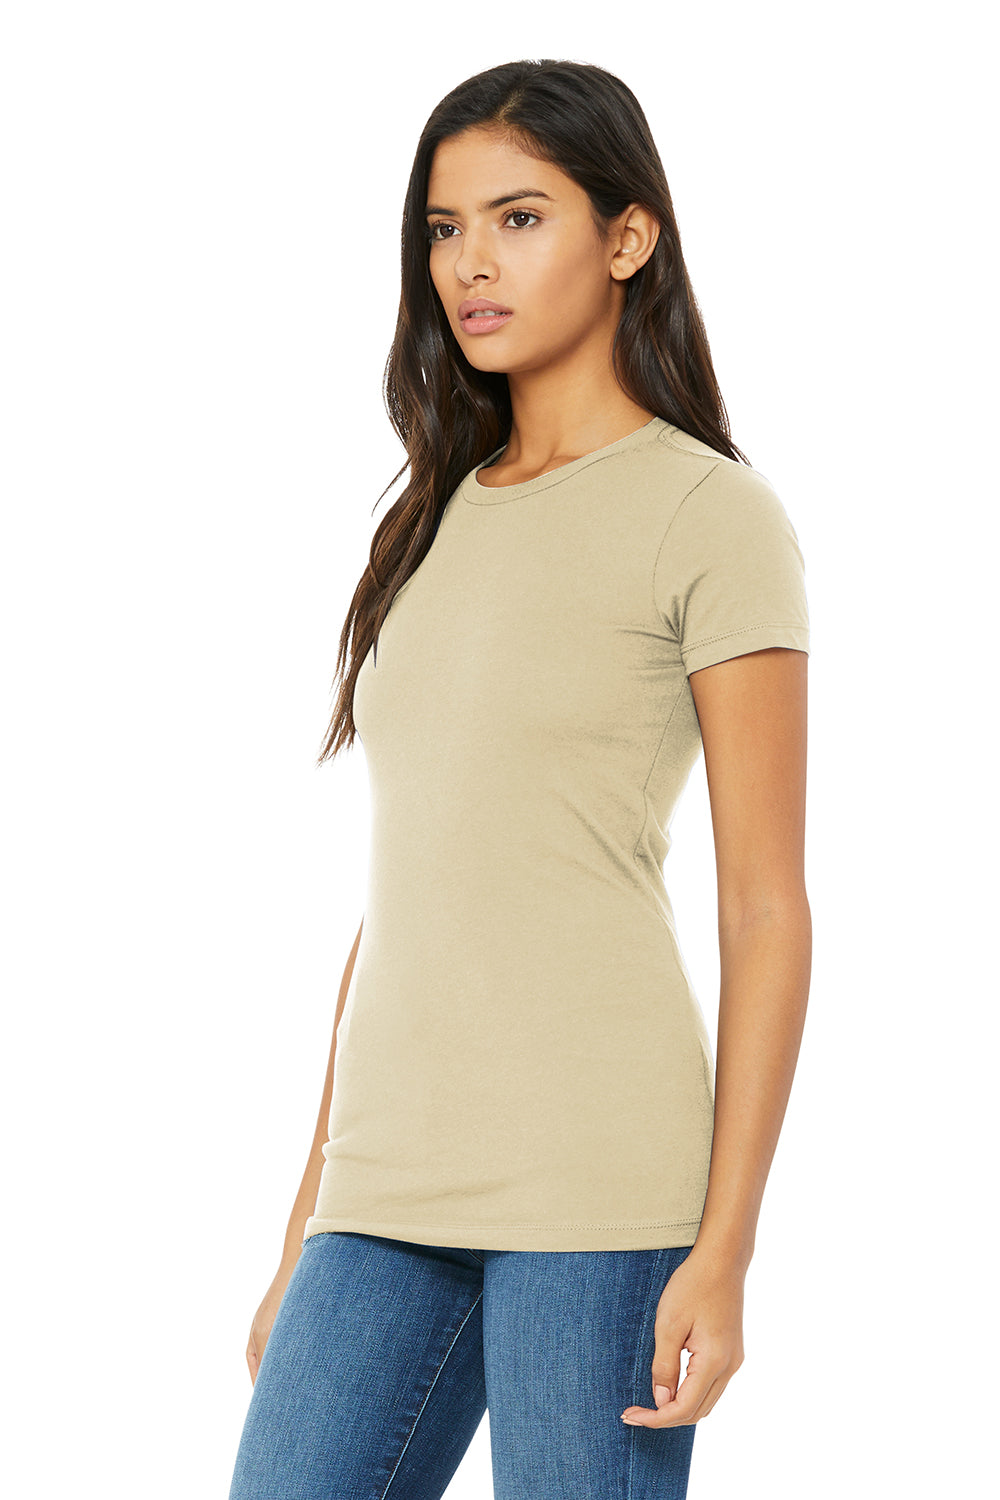 Bella + Canvas BC6004/6004 Womens The Favorite Short Sleeve Crewneck T-Shirt Soft Cream Model 3Q